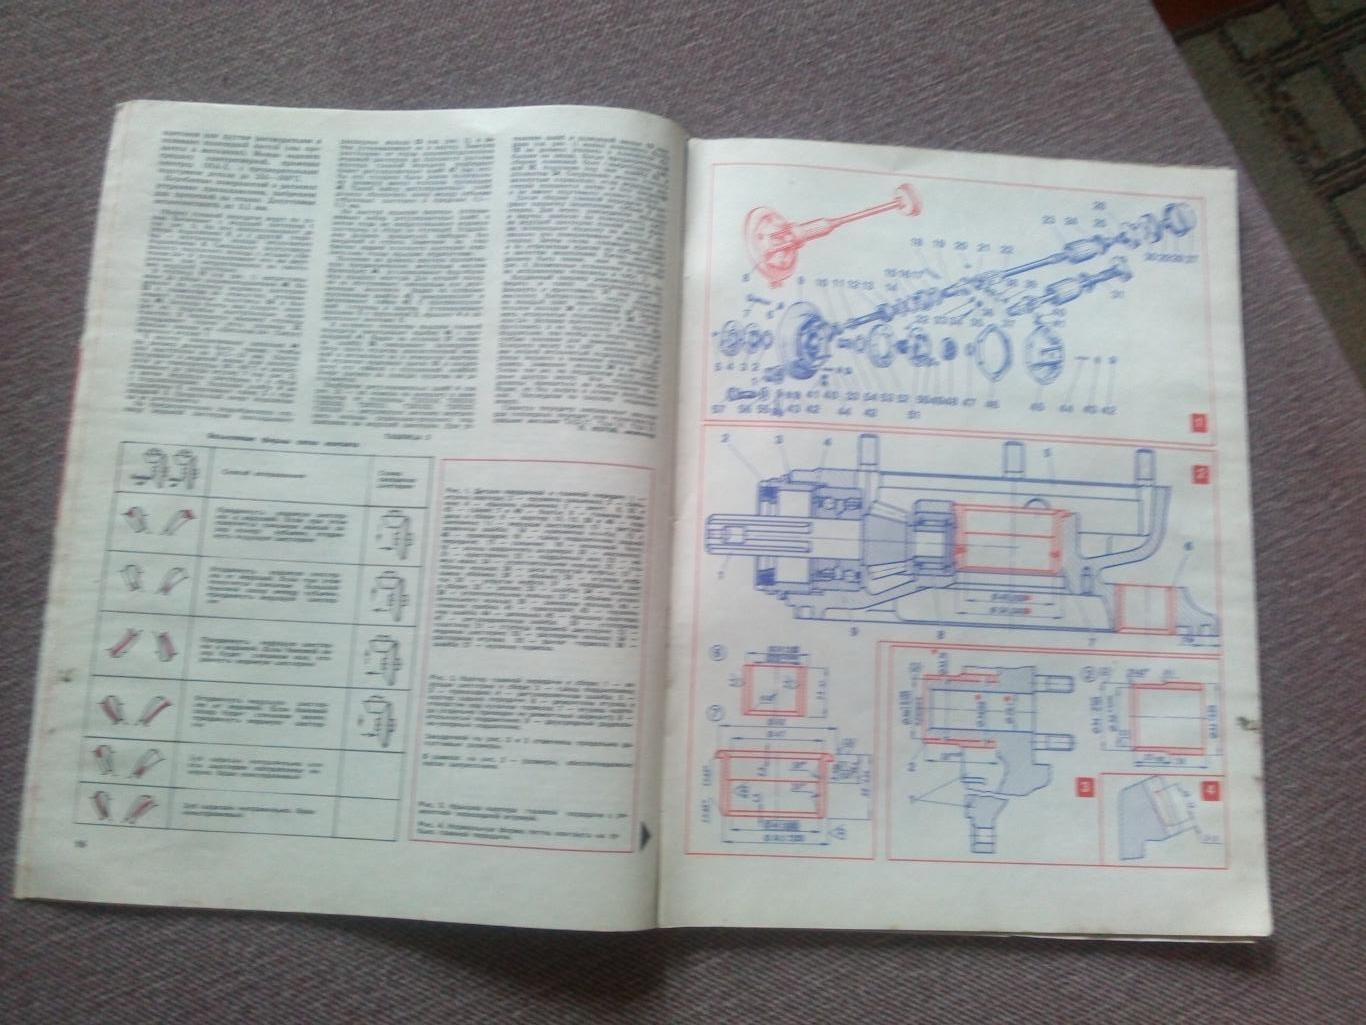 Журнал СССР :За рулем№ 8 ( август ) 1982 г. ( Автомобиль , транспорт ) 5